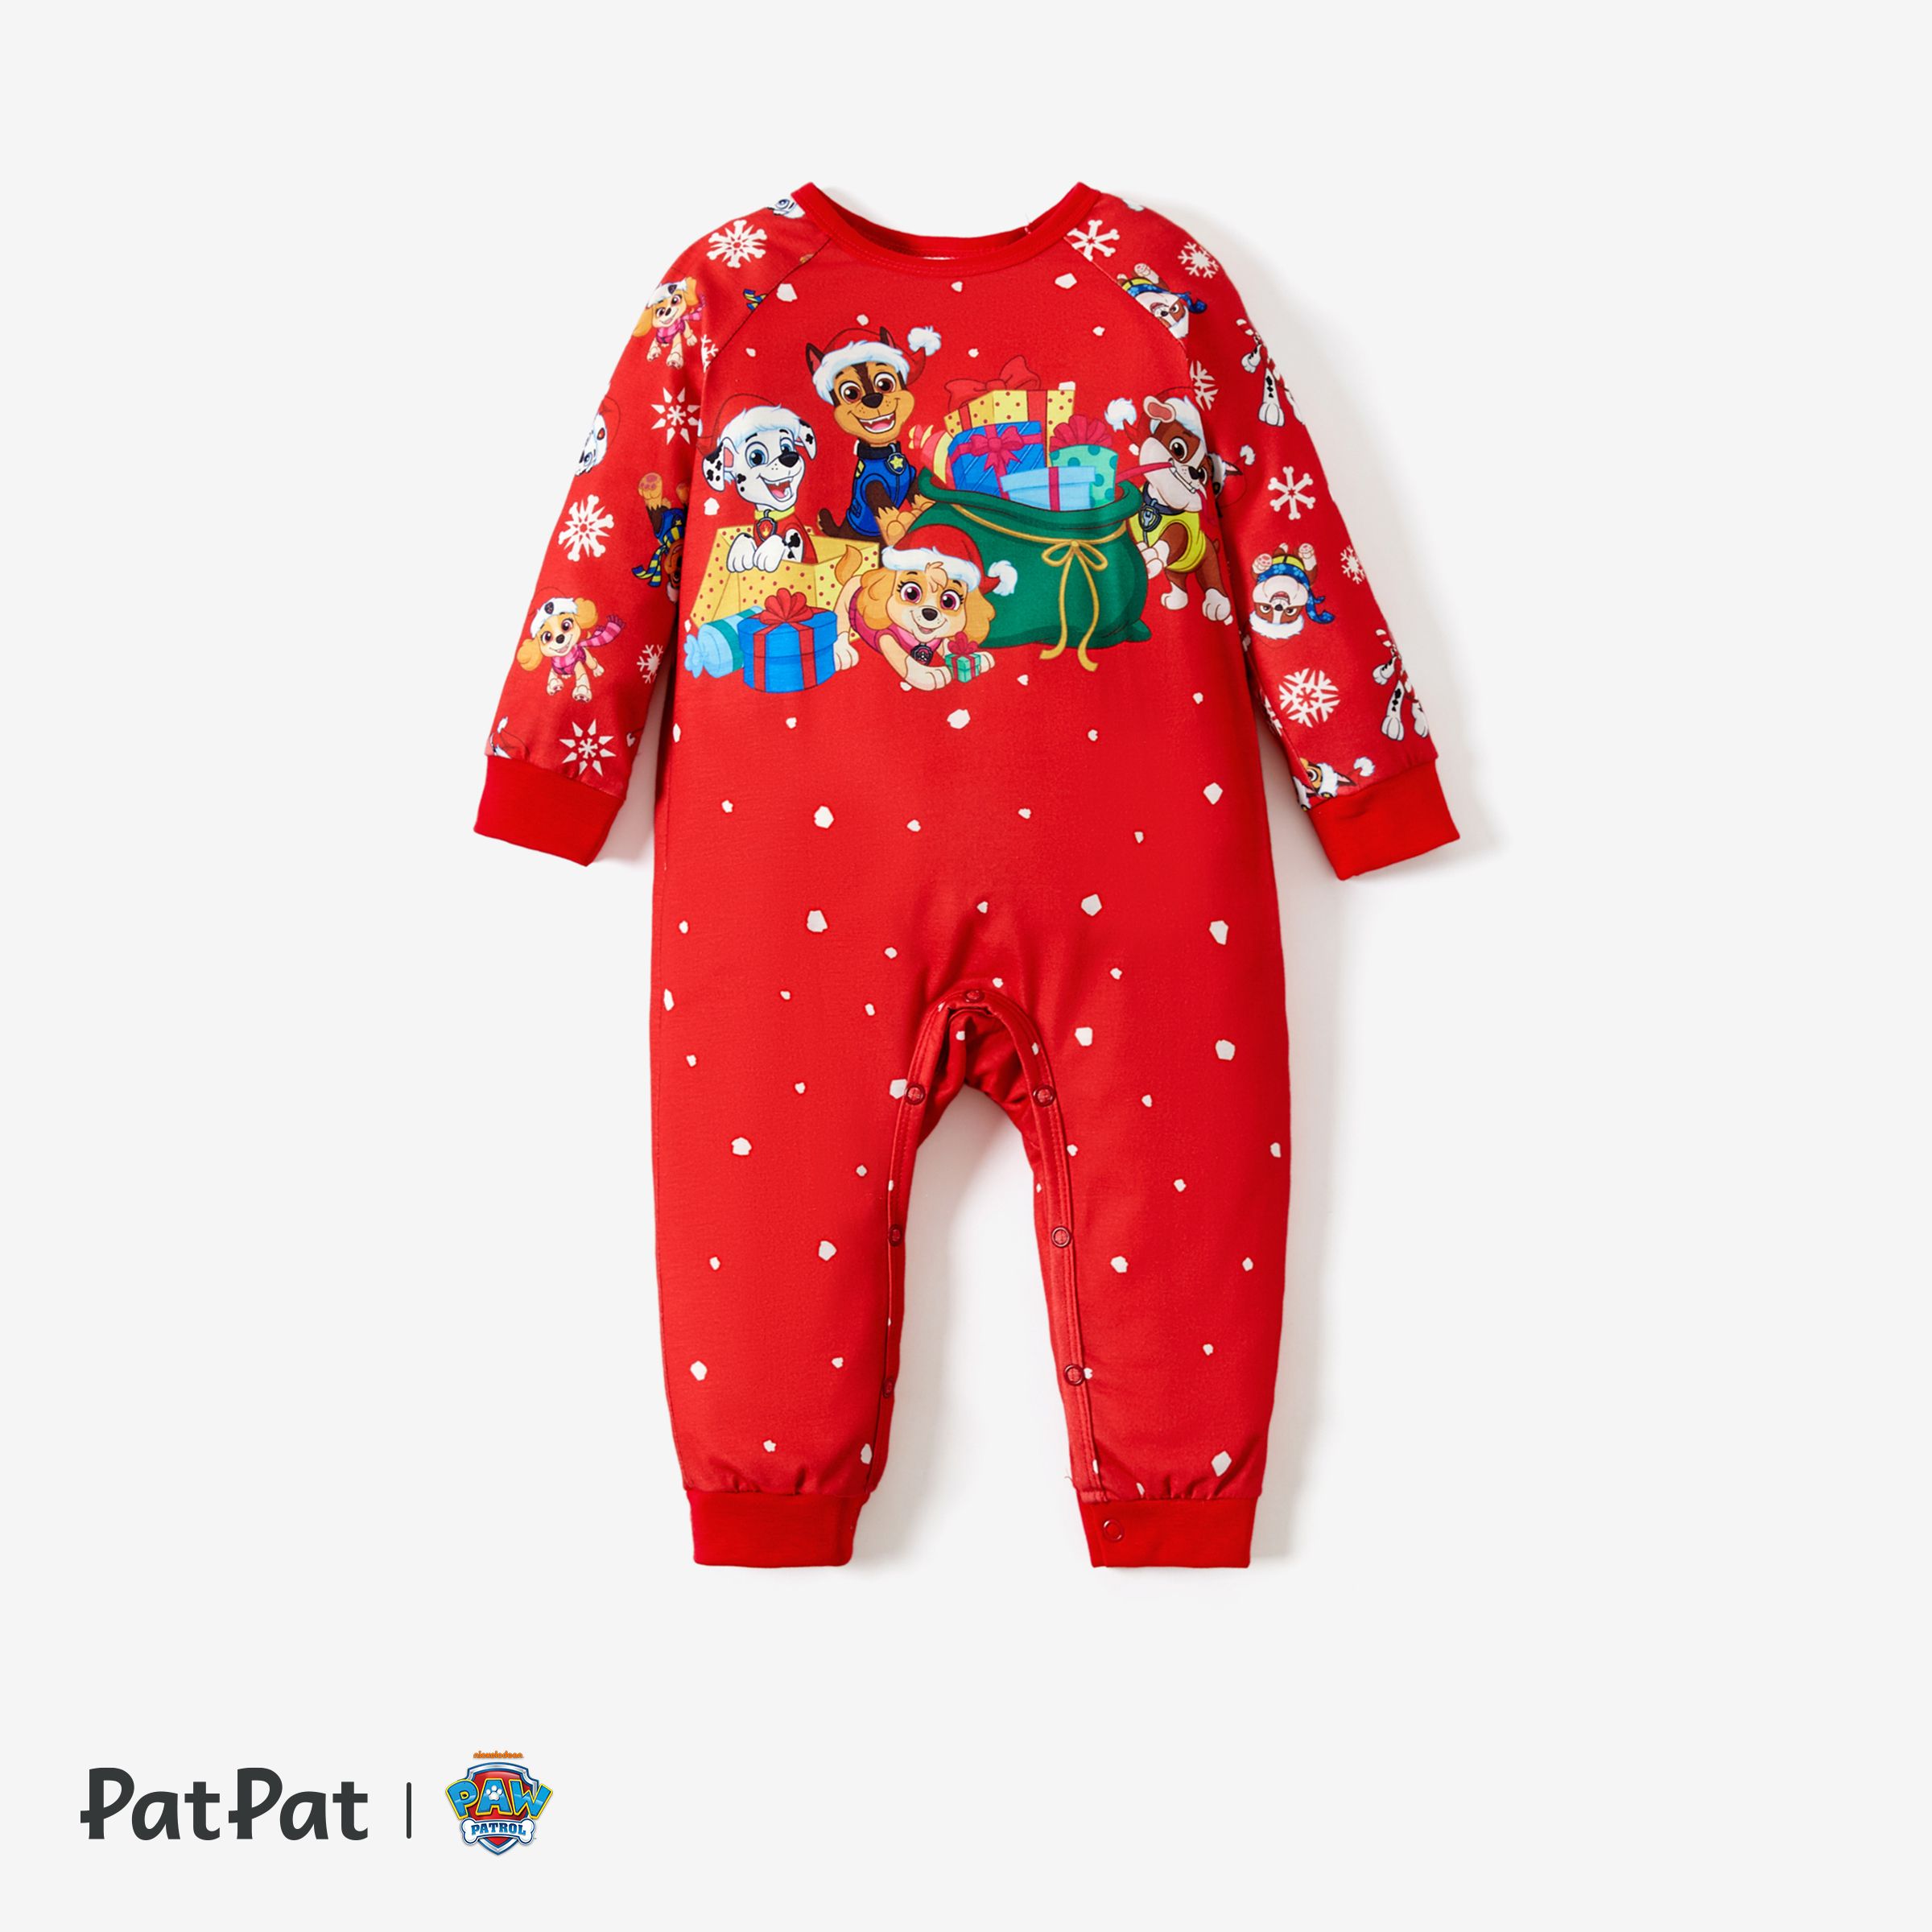 PAW Patrol Christmas Big Graphic Family Matching Pajamas Sets(Flame Resistant)